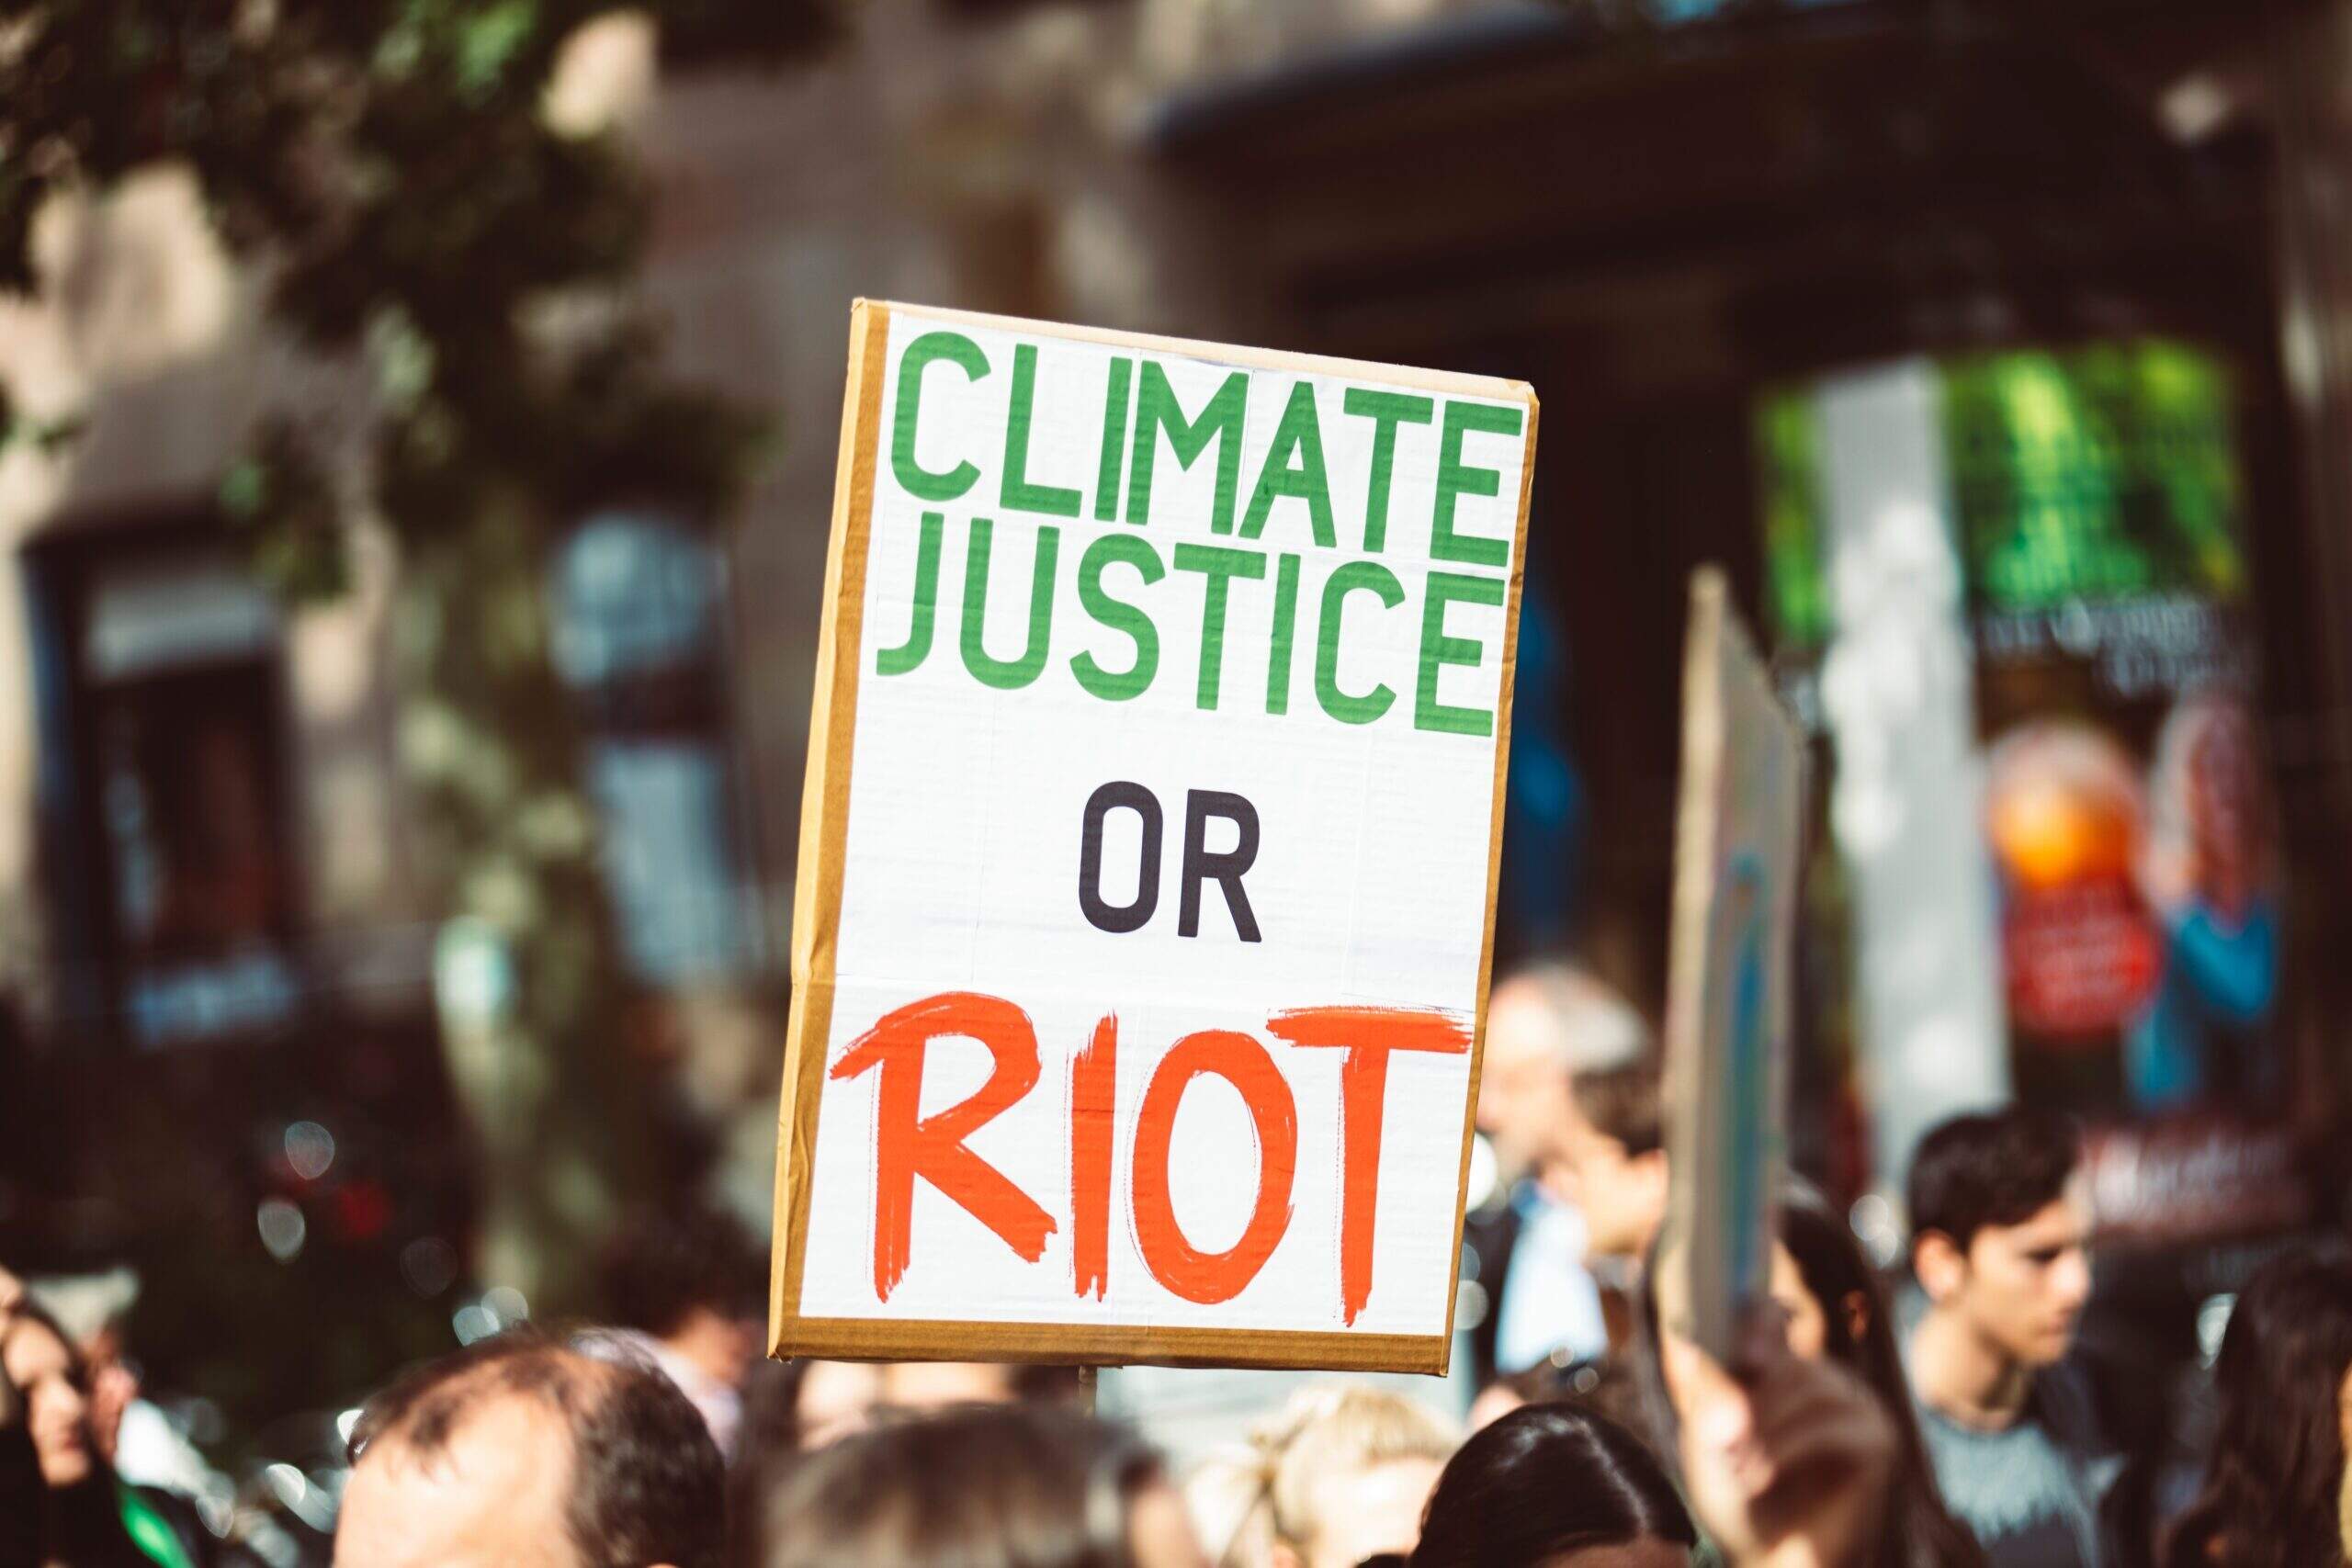 Placa "climate justice or RIOT"